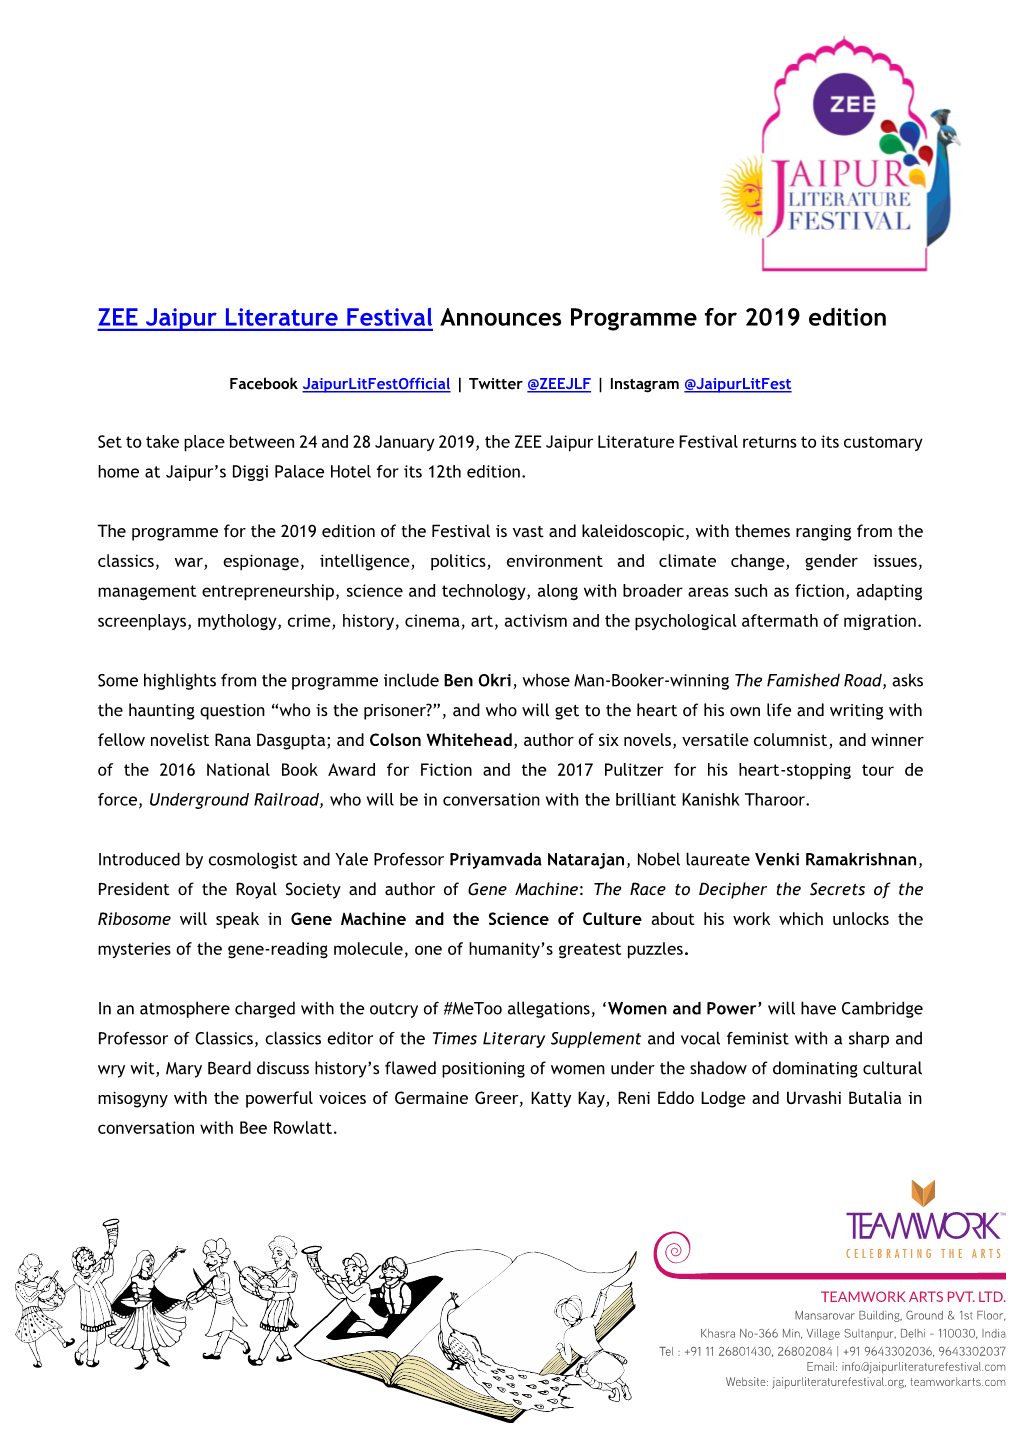 ZEE Jaipur Literature Festival 2019 Programme Announced